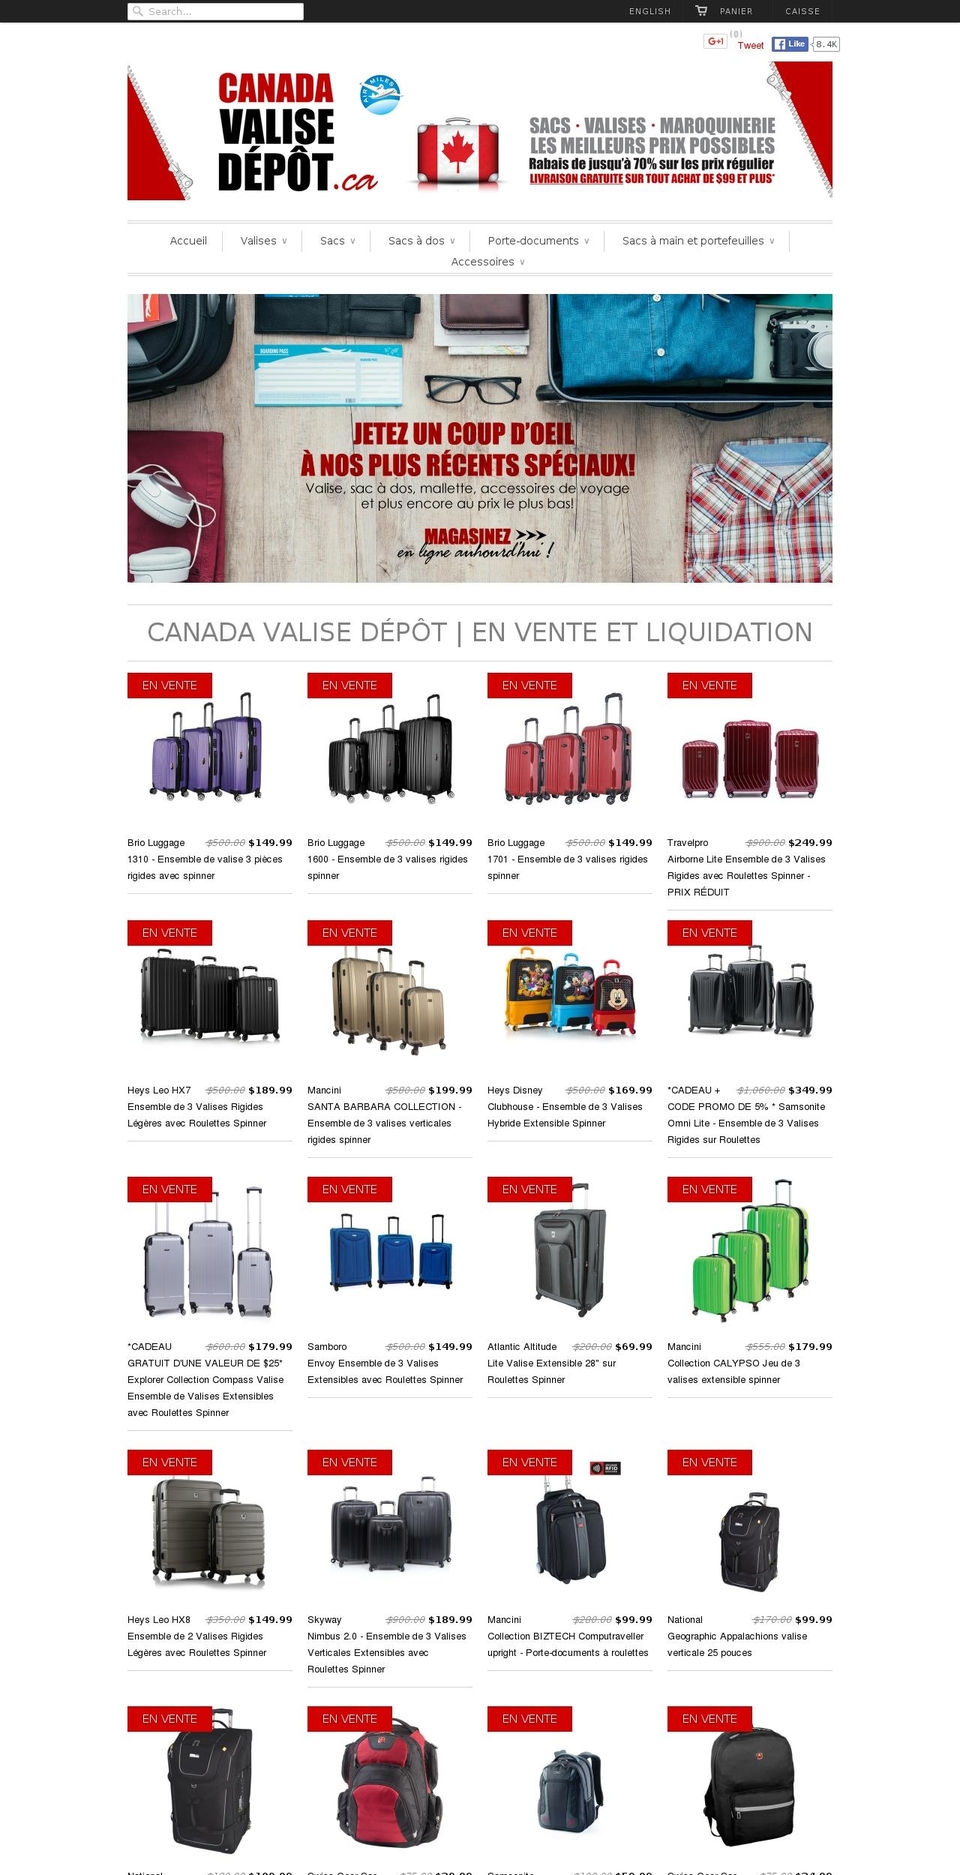 canadavalisedepot.ca shopify website screenshot